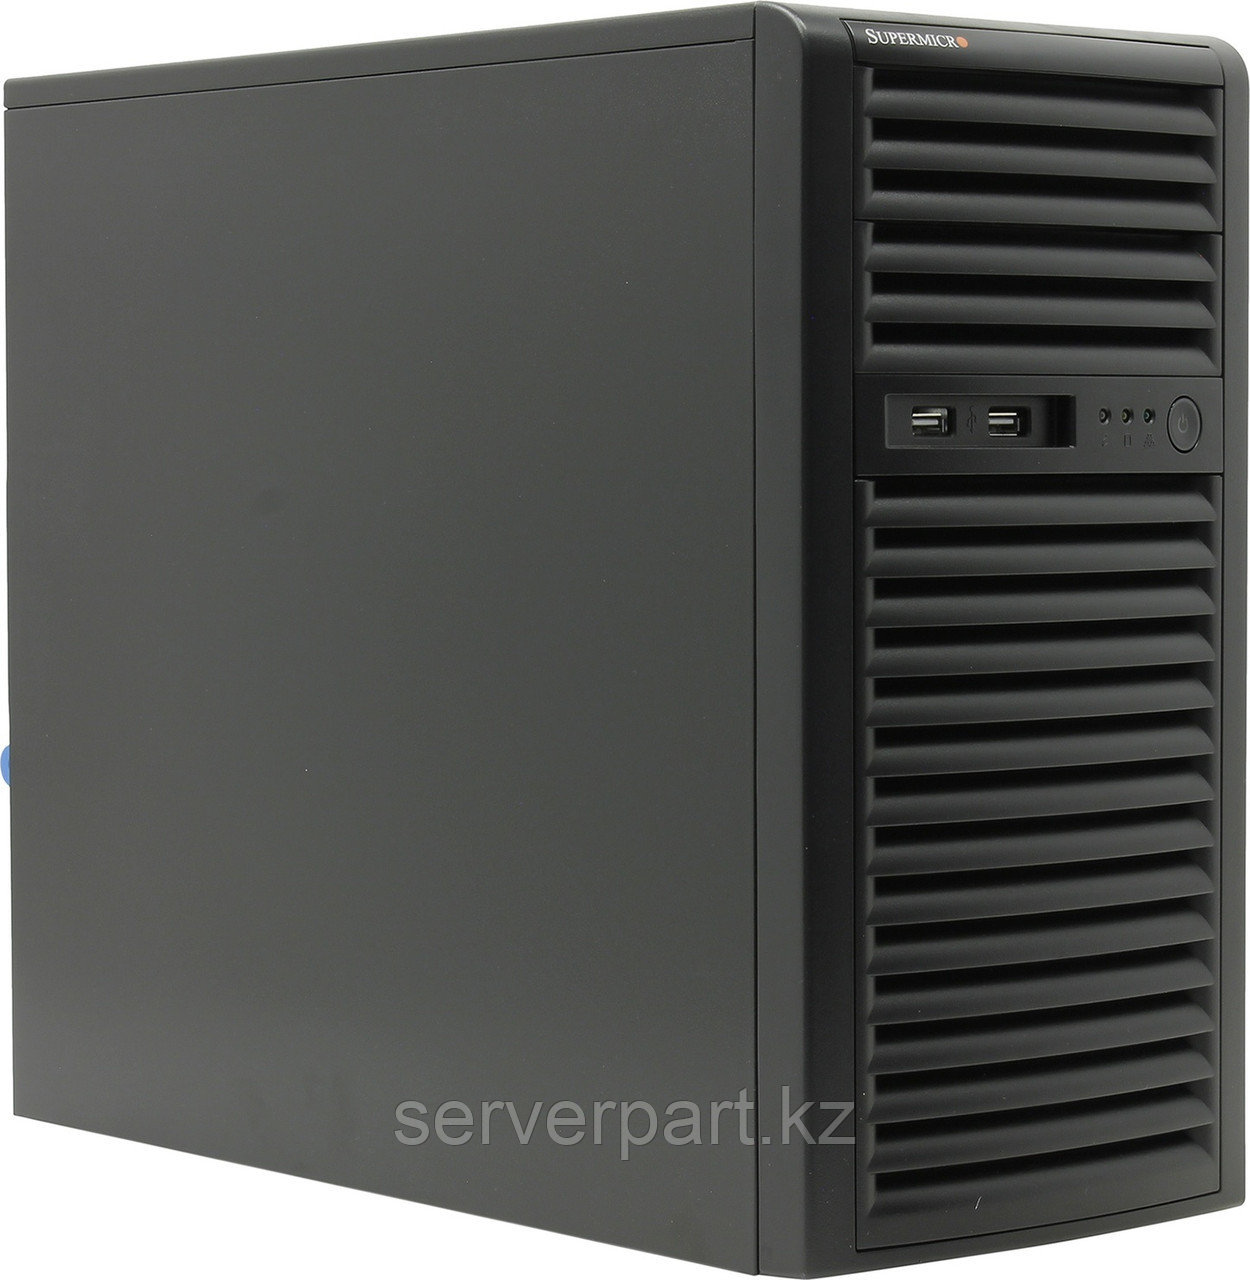 Сервер Supermicro SYS-5039C (Tower 4LFF)/4-core intel xeon E2224 (3.4GHz)/48GB UDIMM nECC, фото 1